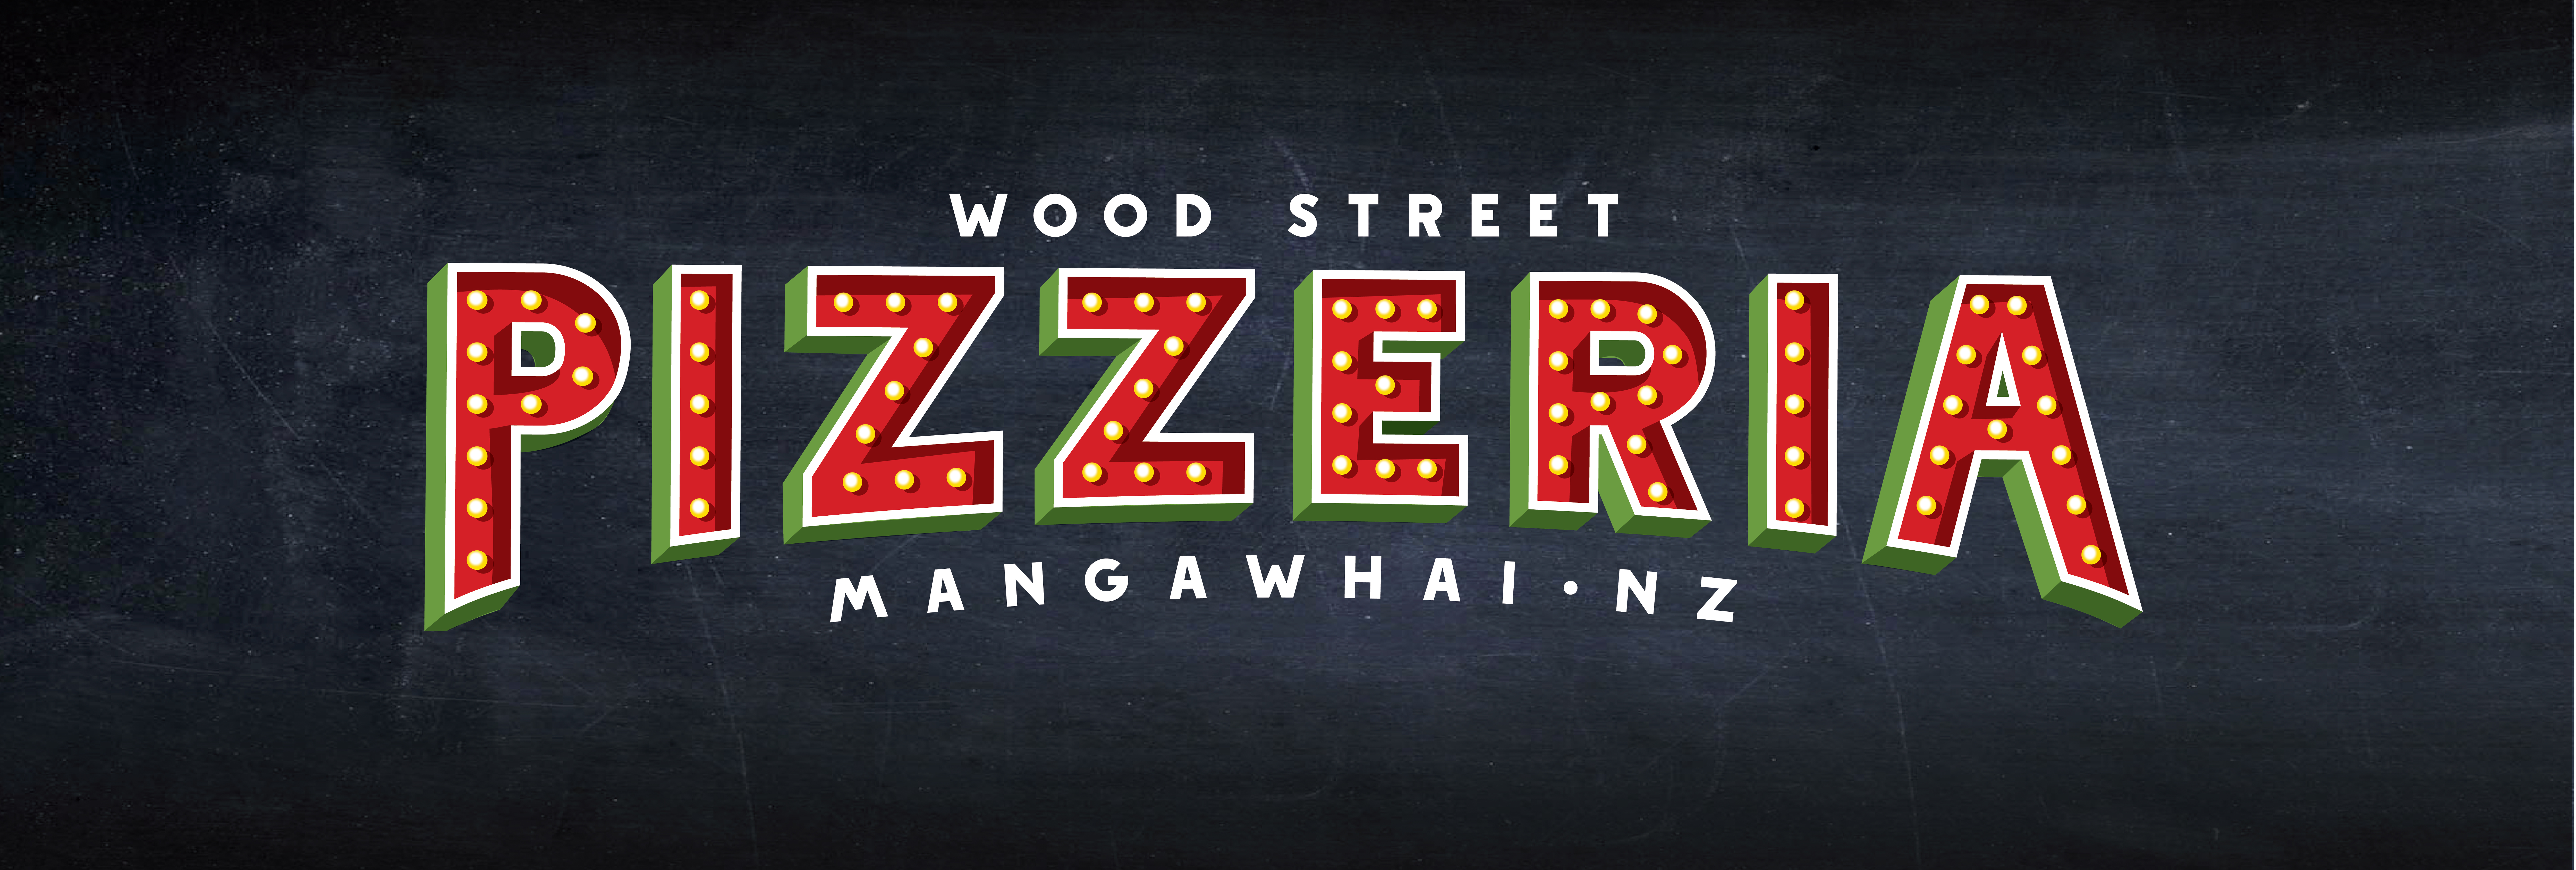 Wood Street Pizzeria